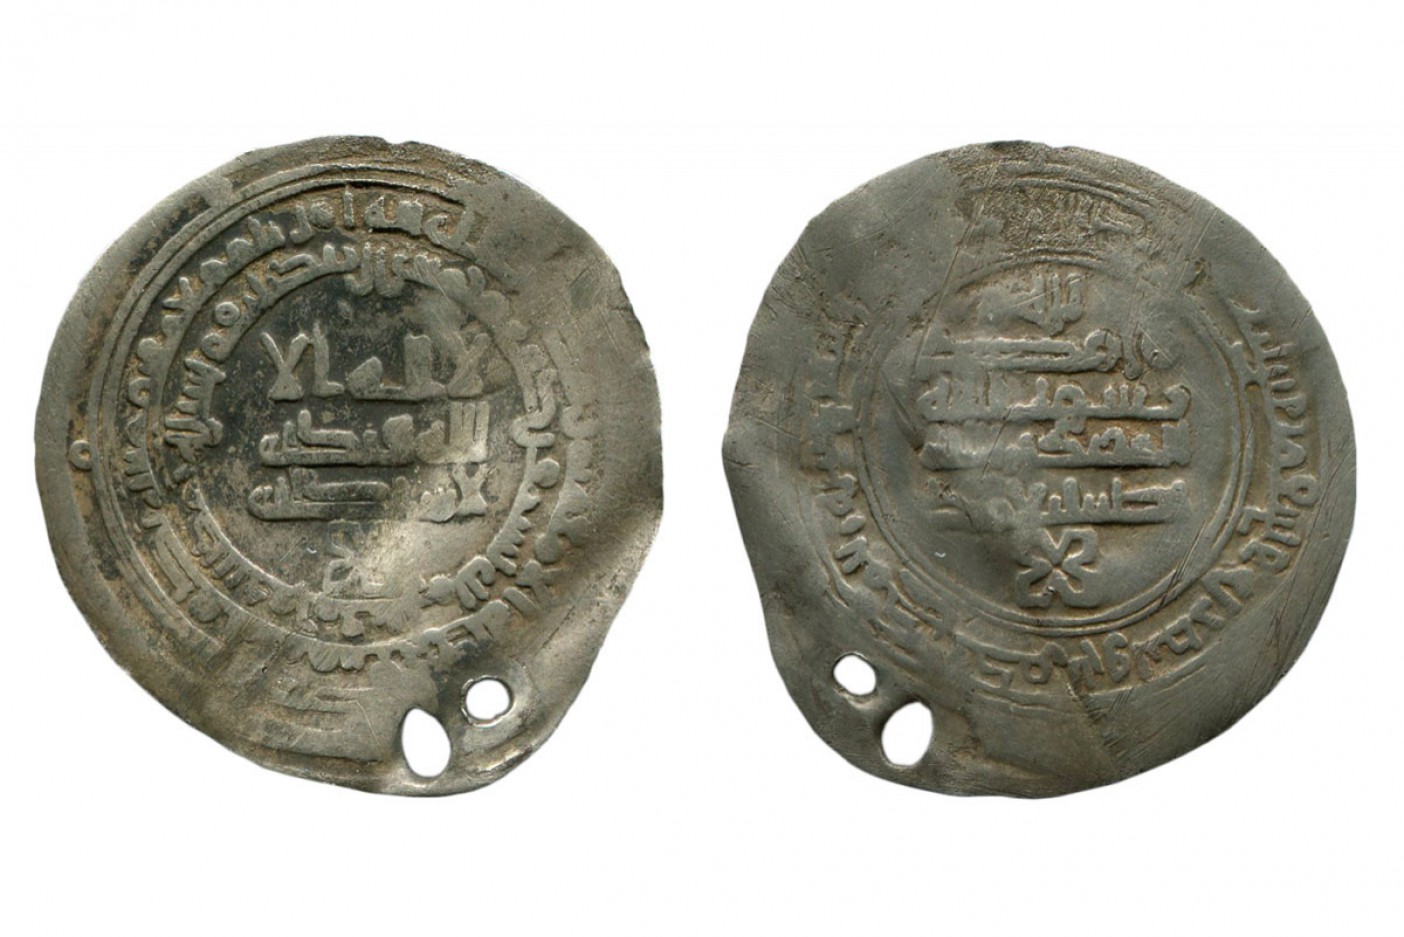 Ганзейские монеты 10 века. Монету Дорхон 10 века. Смоленские монеты. Монеты 10 века